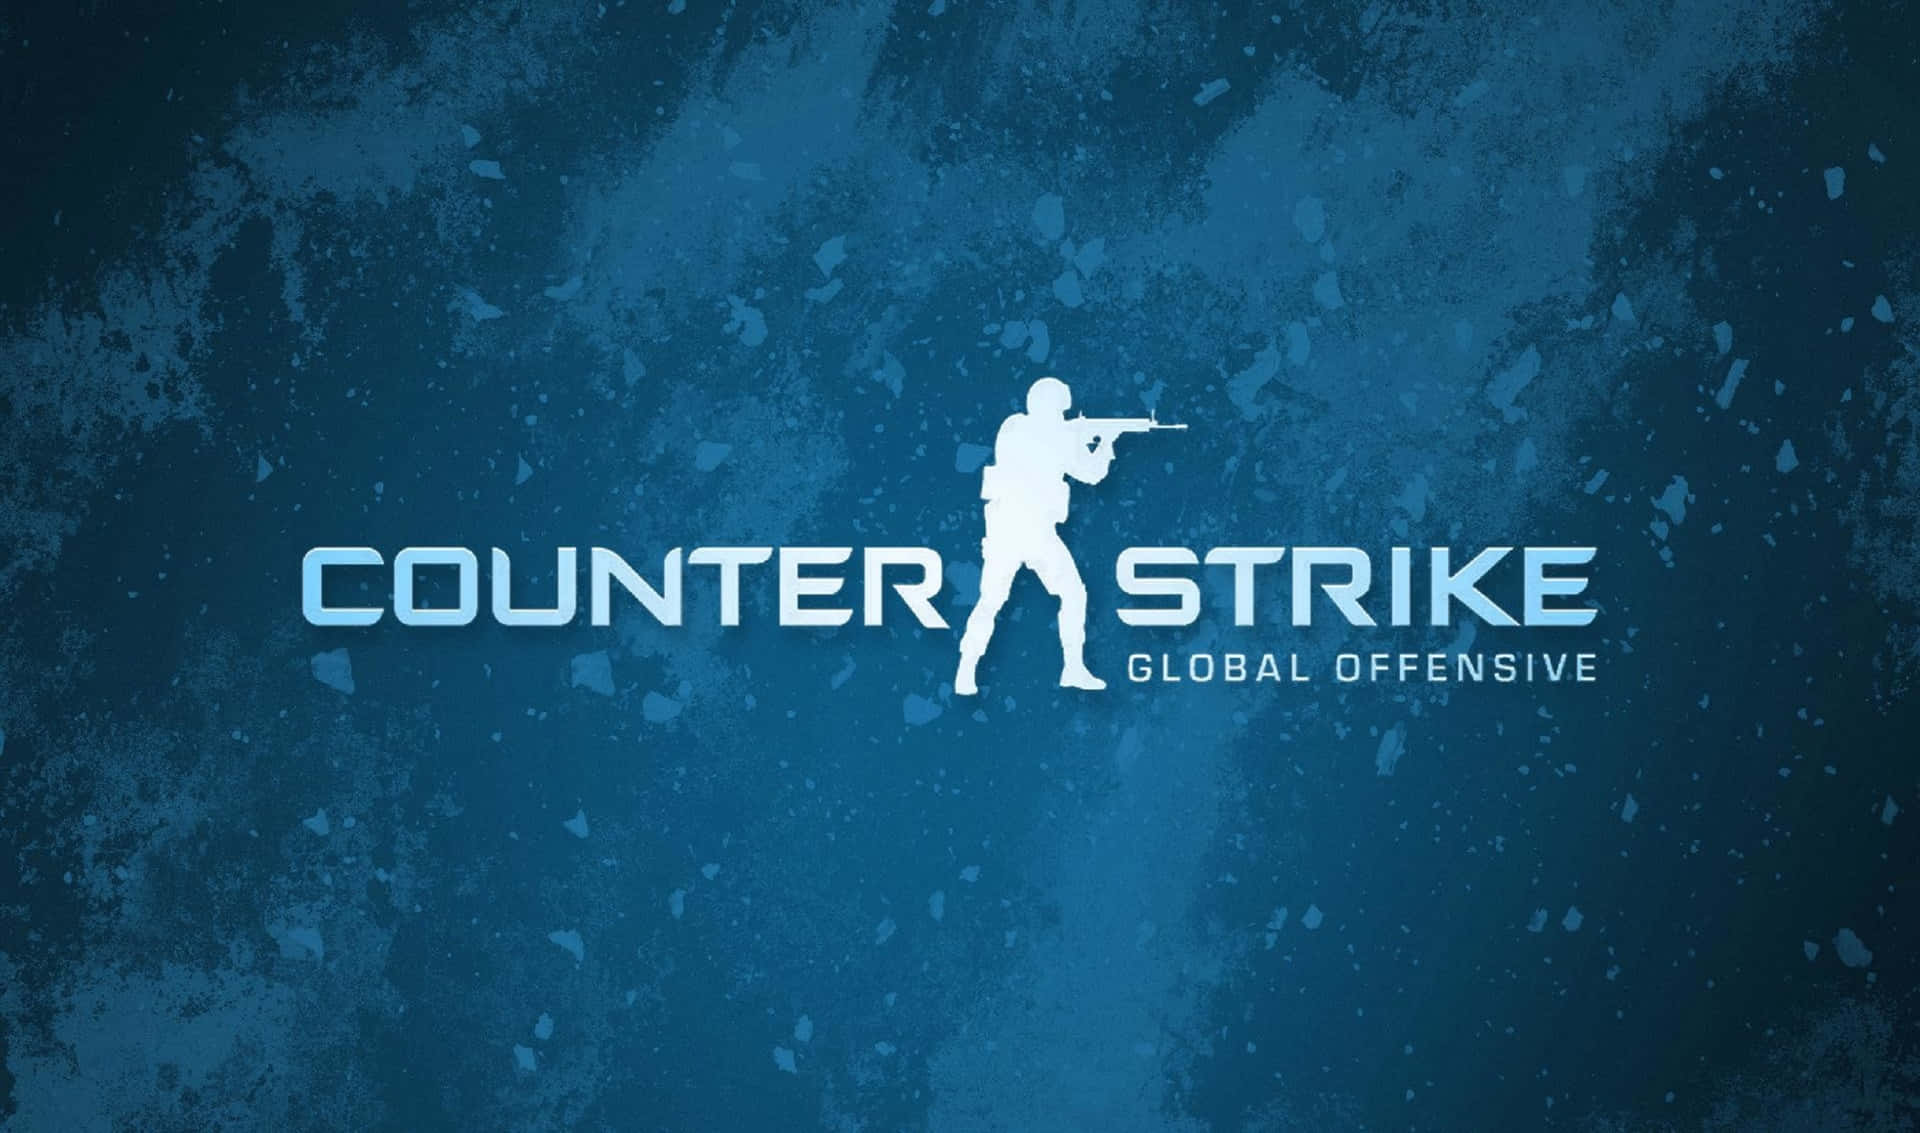 Losjugadores Profesionales Compiten Intensamente En Counter-strike Global Offensive.